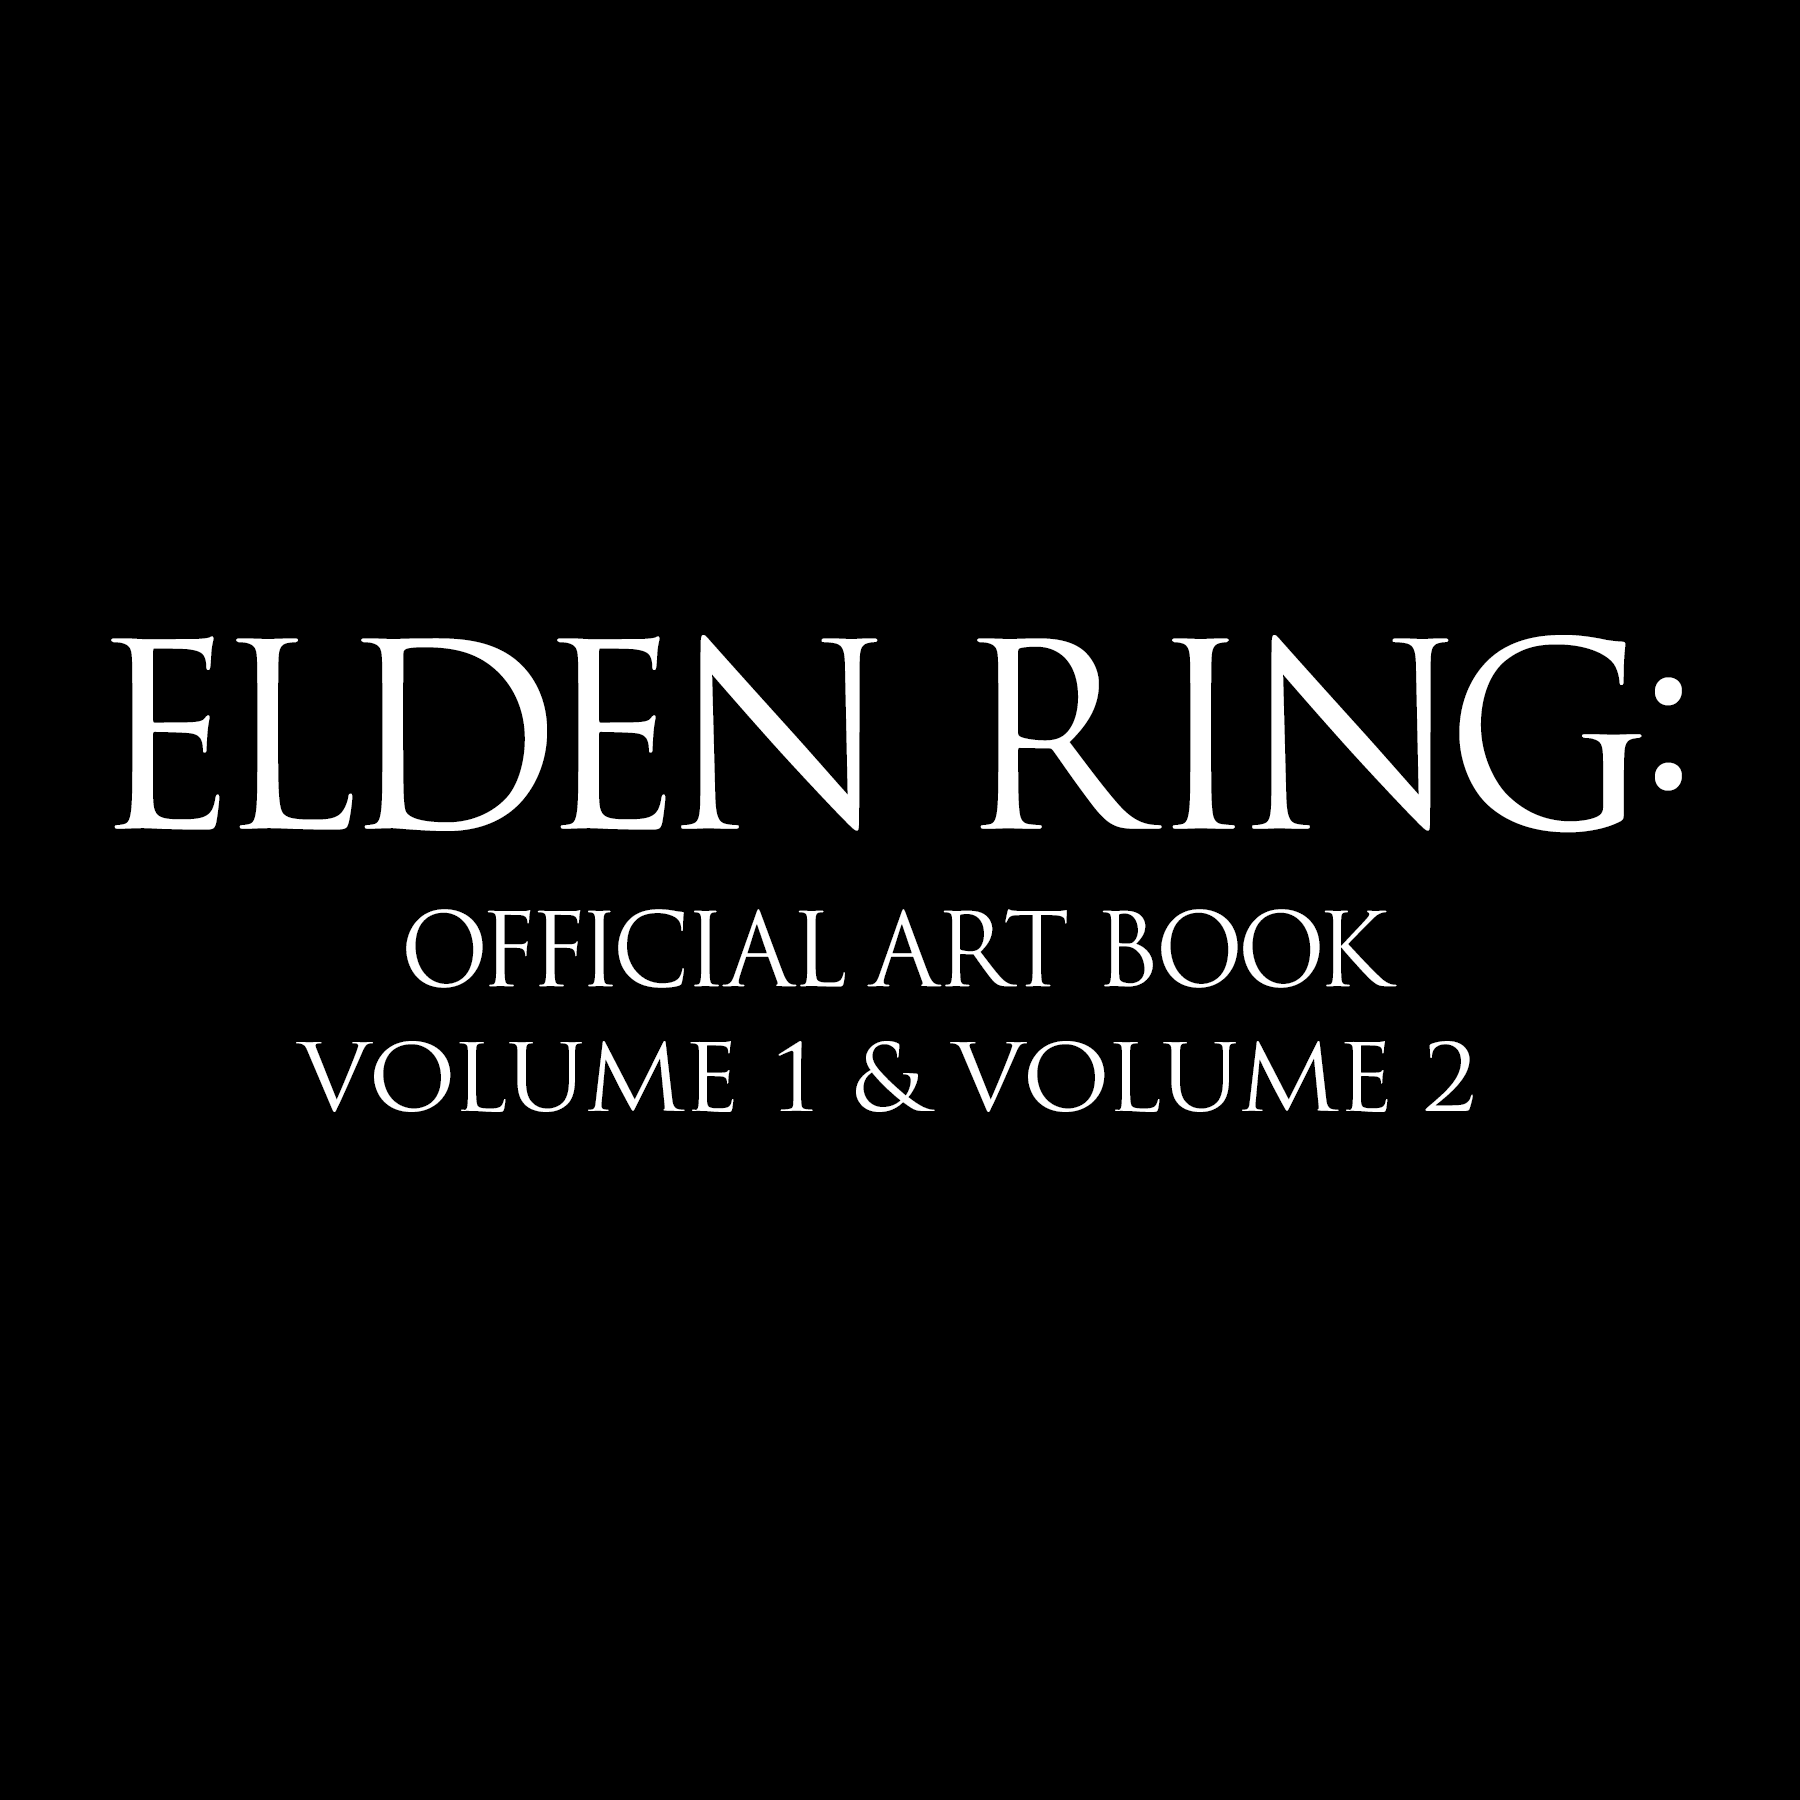 Elden Ring Official Art Book Release